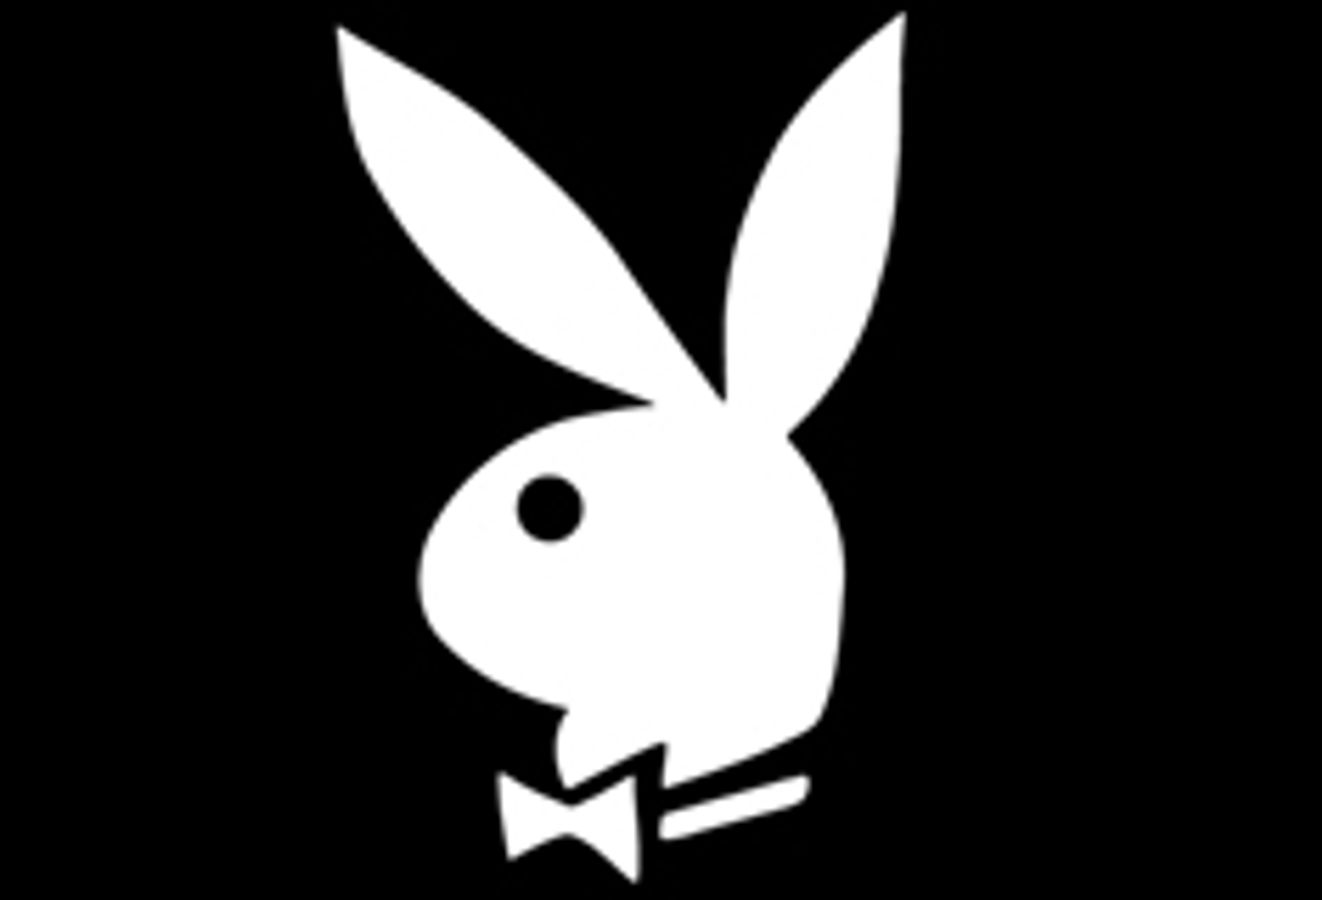 Playboy Entertainment